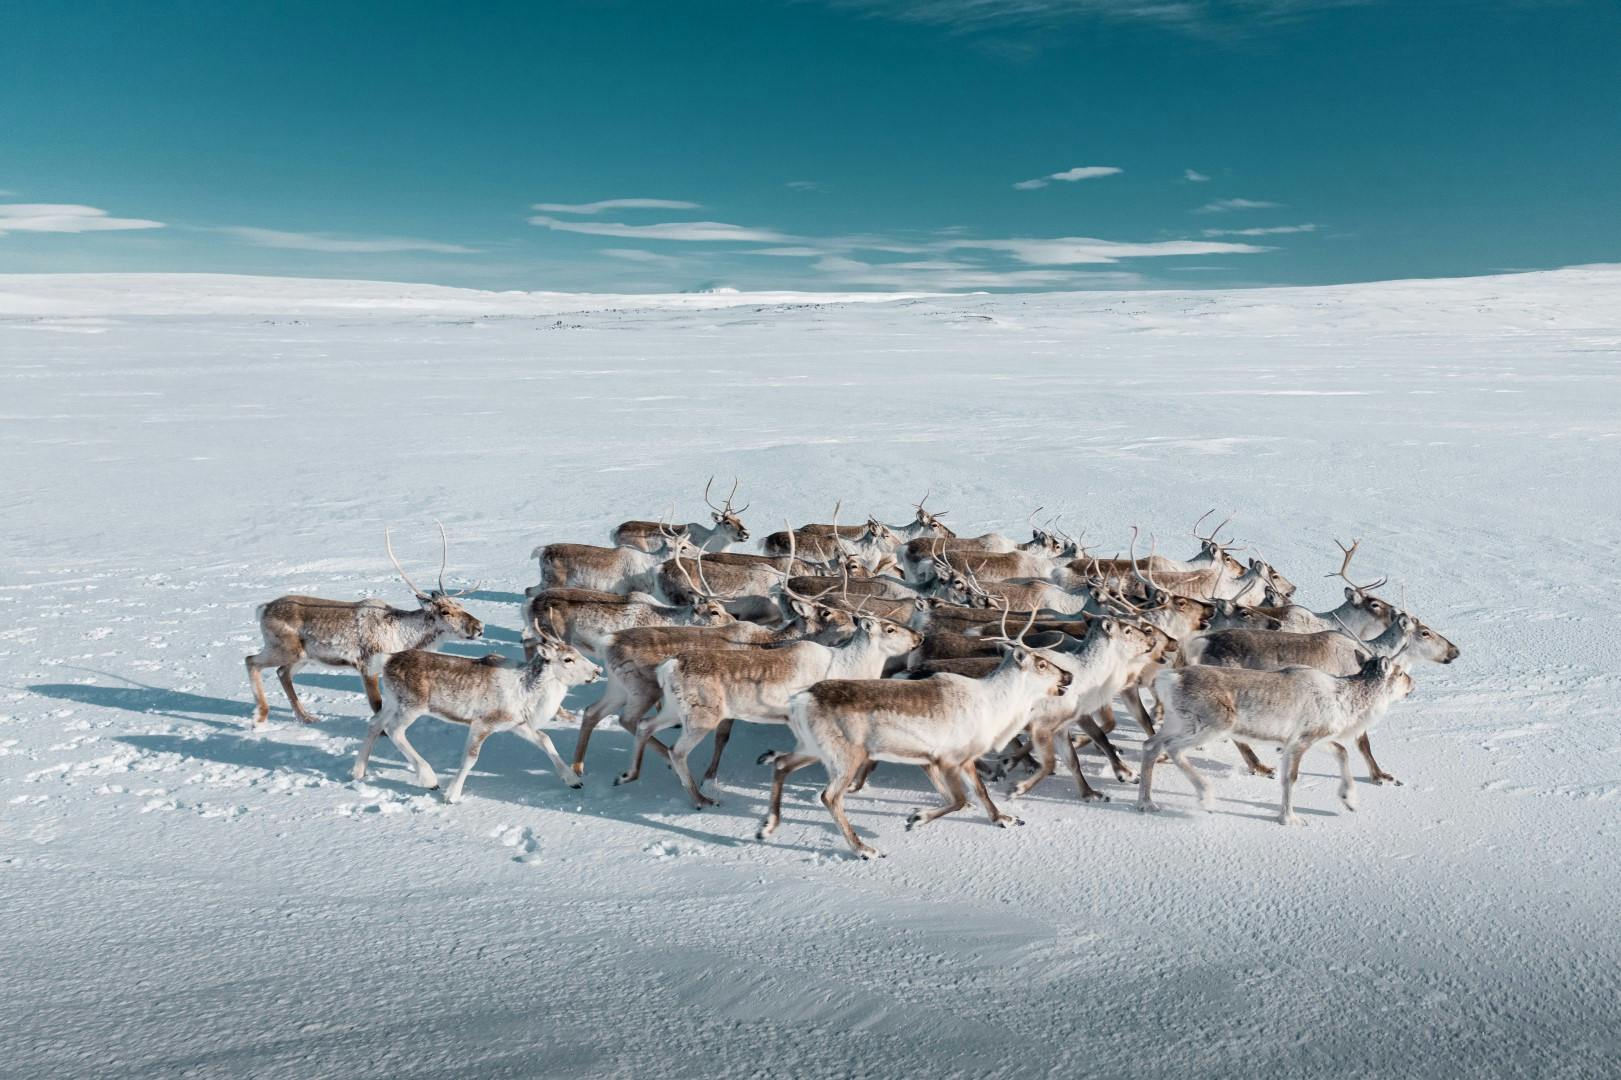 A herd of reindeer running on a snowy ground